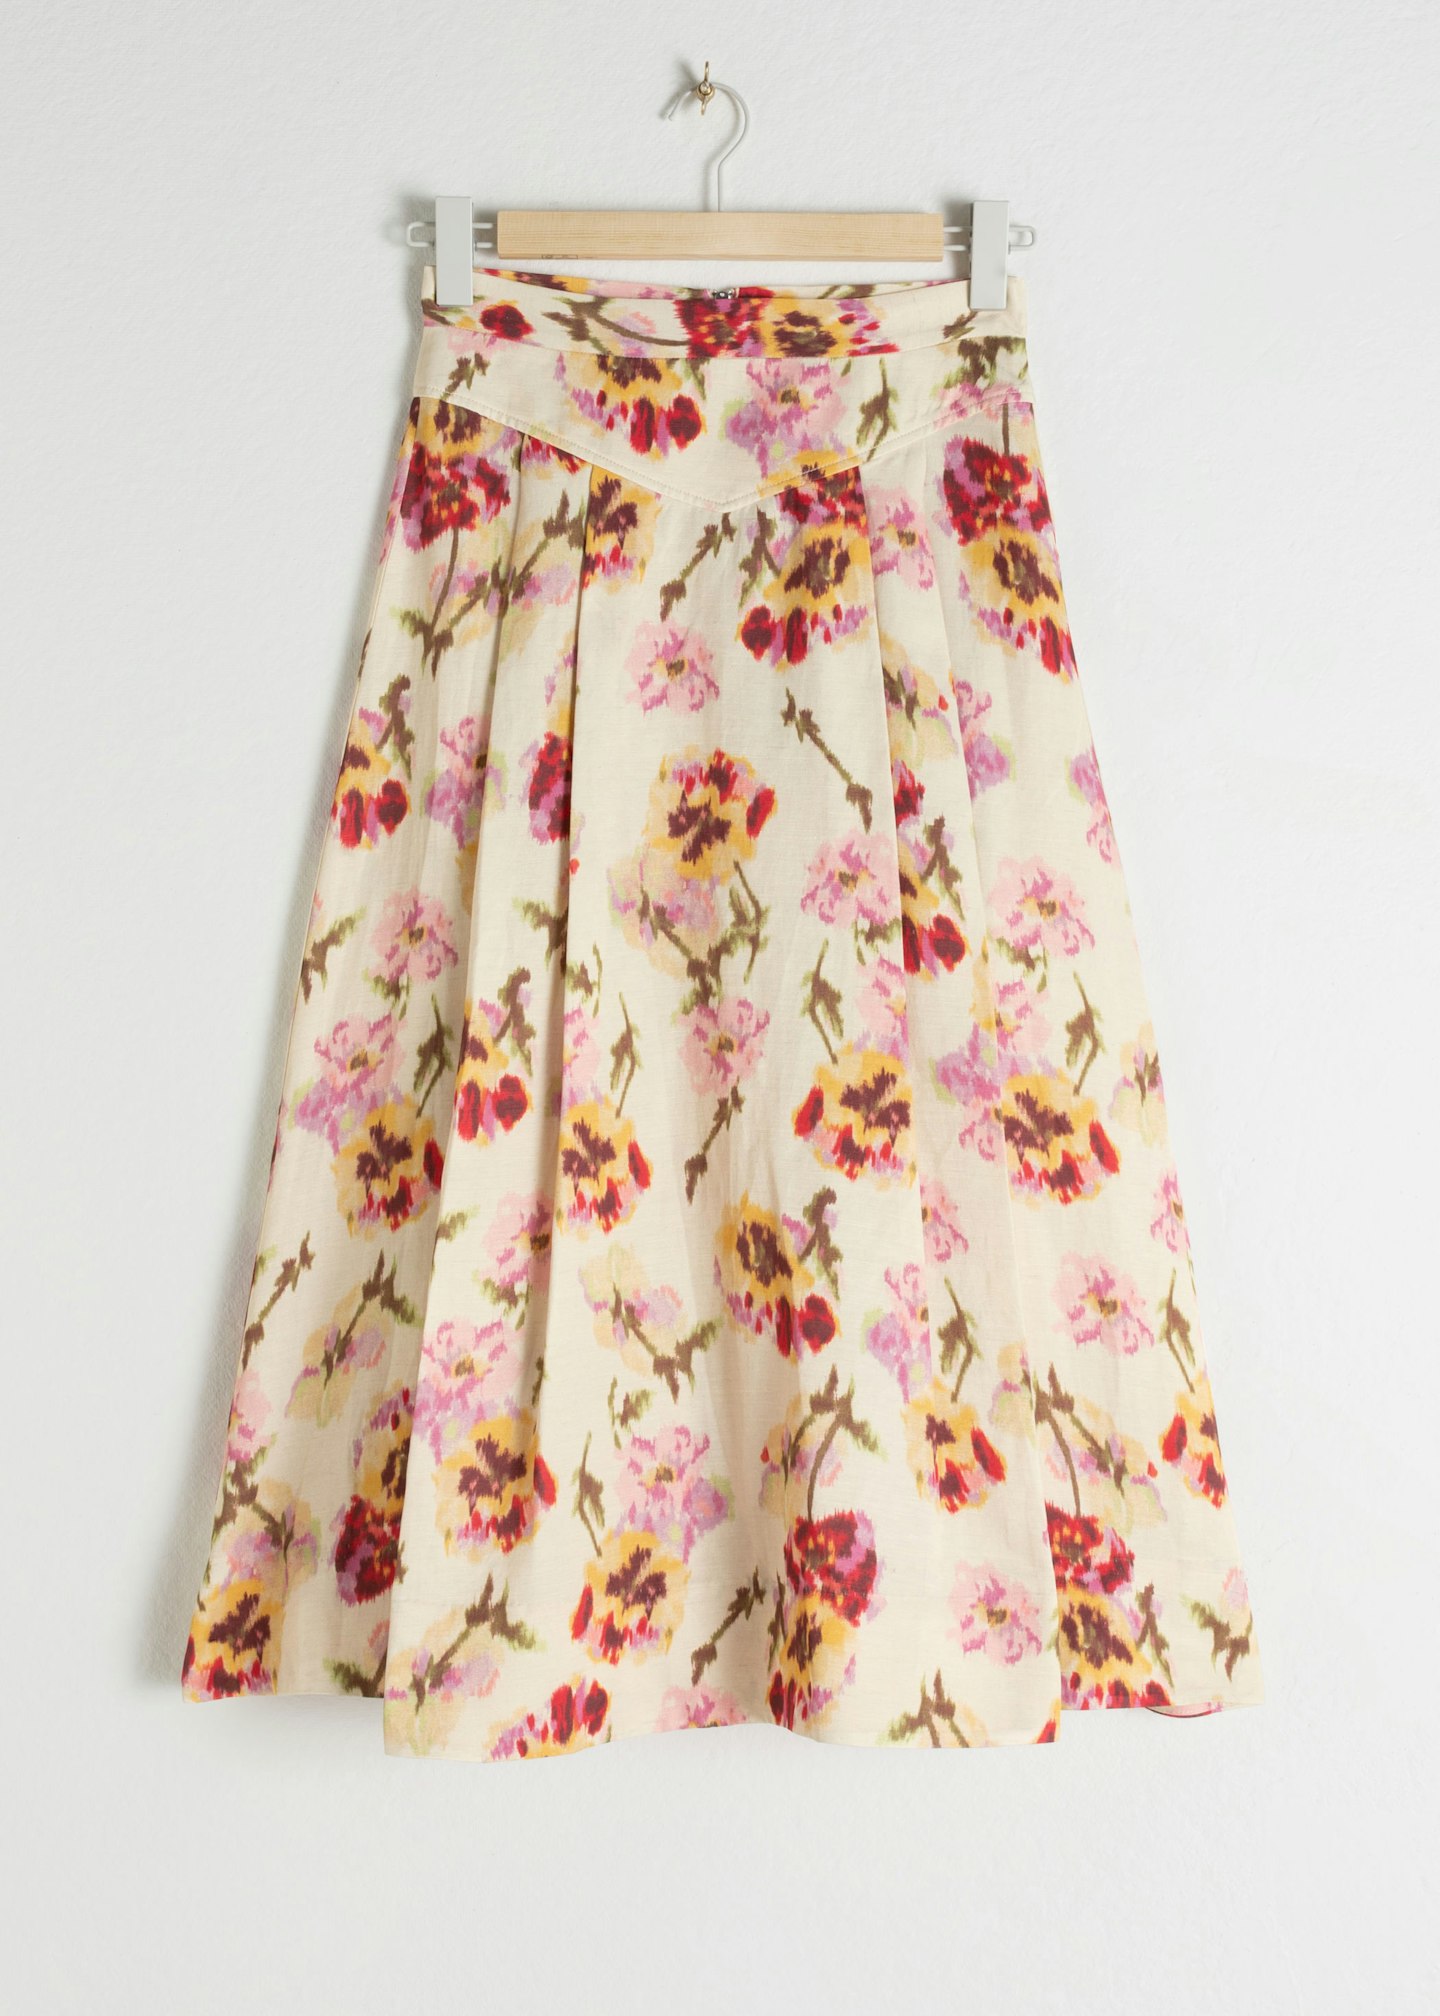 A-Line Floral Skirt, £69